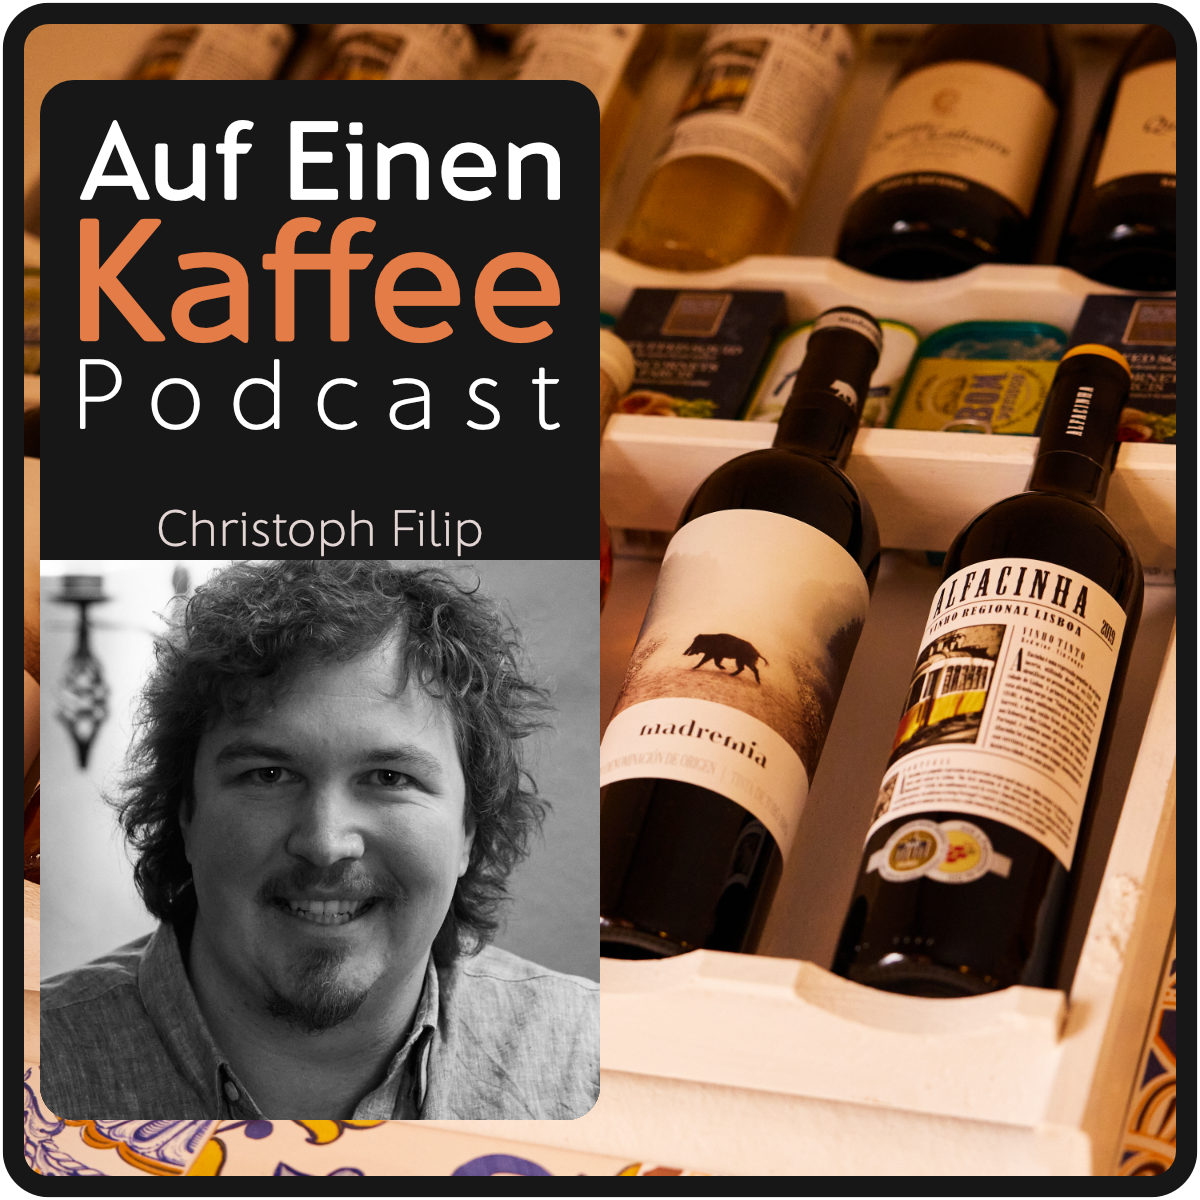 Cover-Cafe012-Christoph-Filip-Iberico-AufEinenKaffee-Podcast